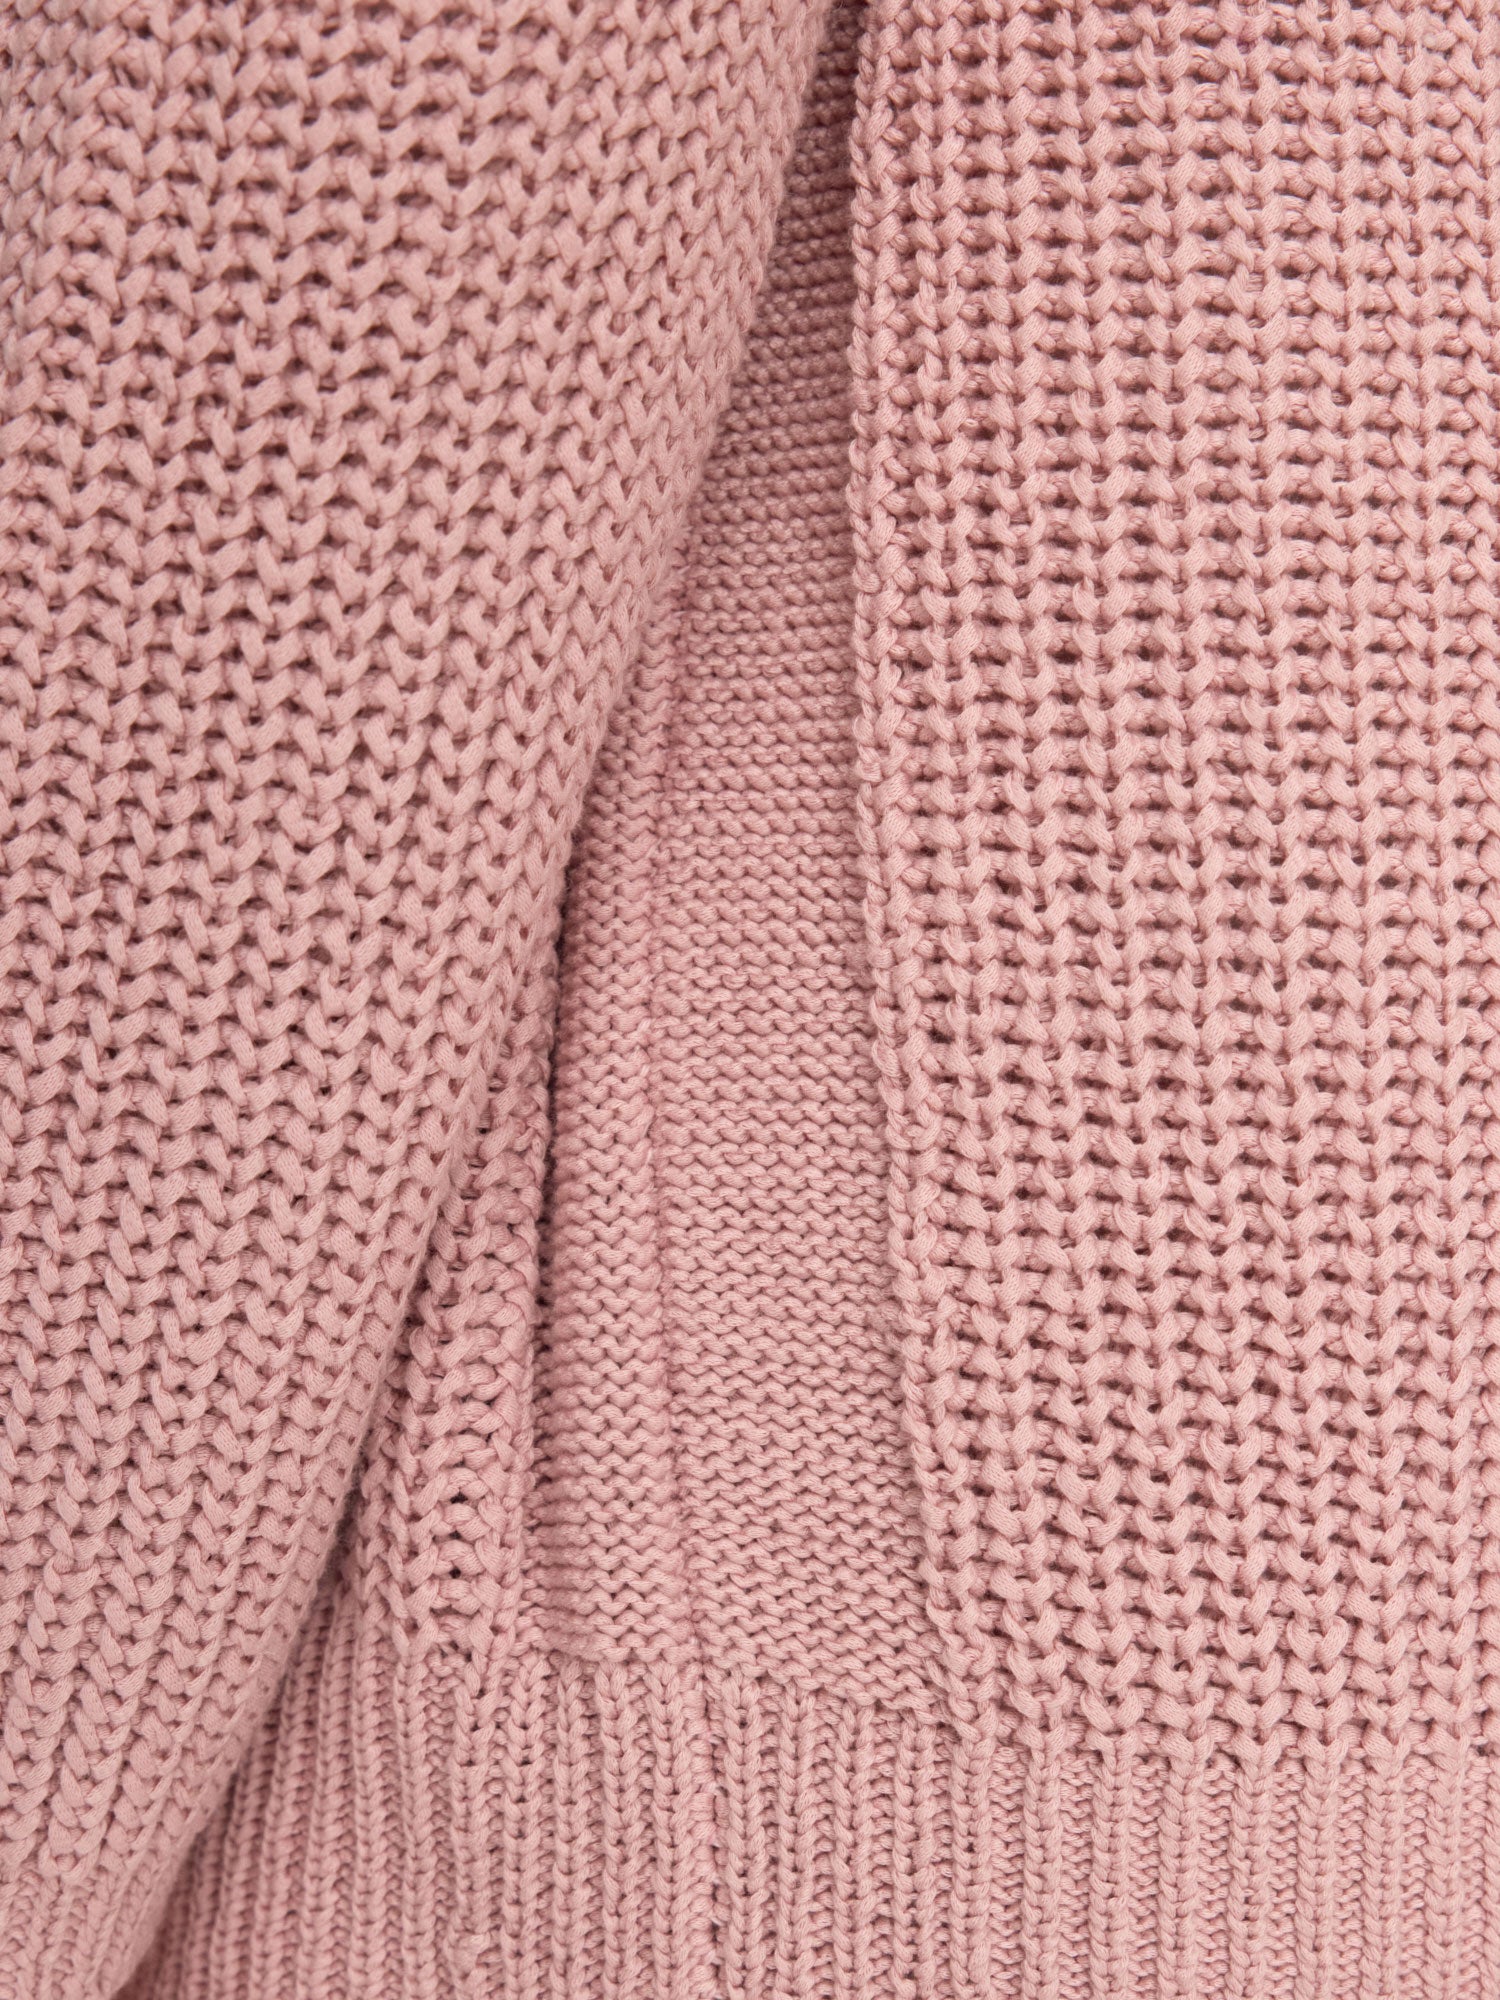 Jen linen cotton pink cardigan sweater close up